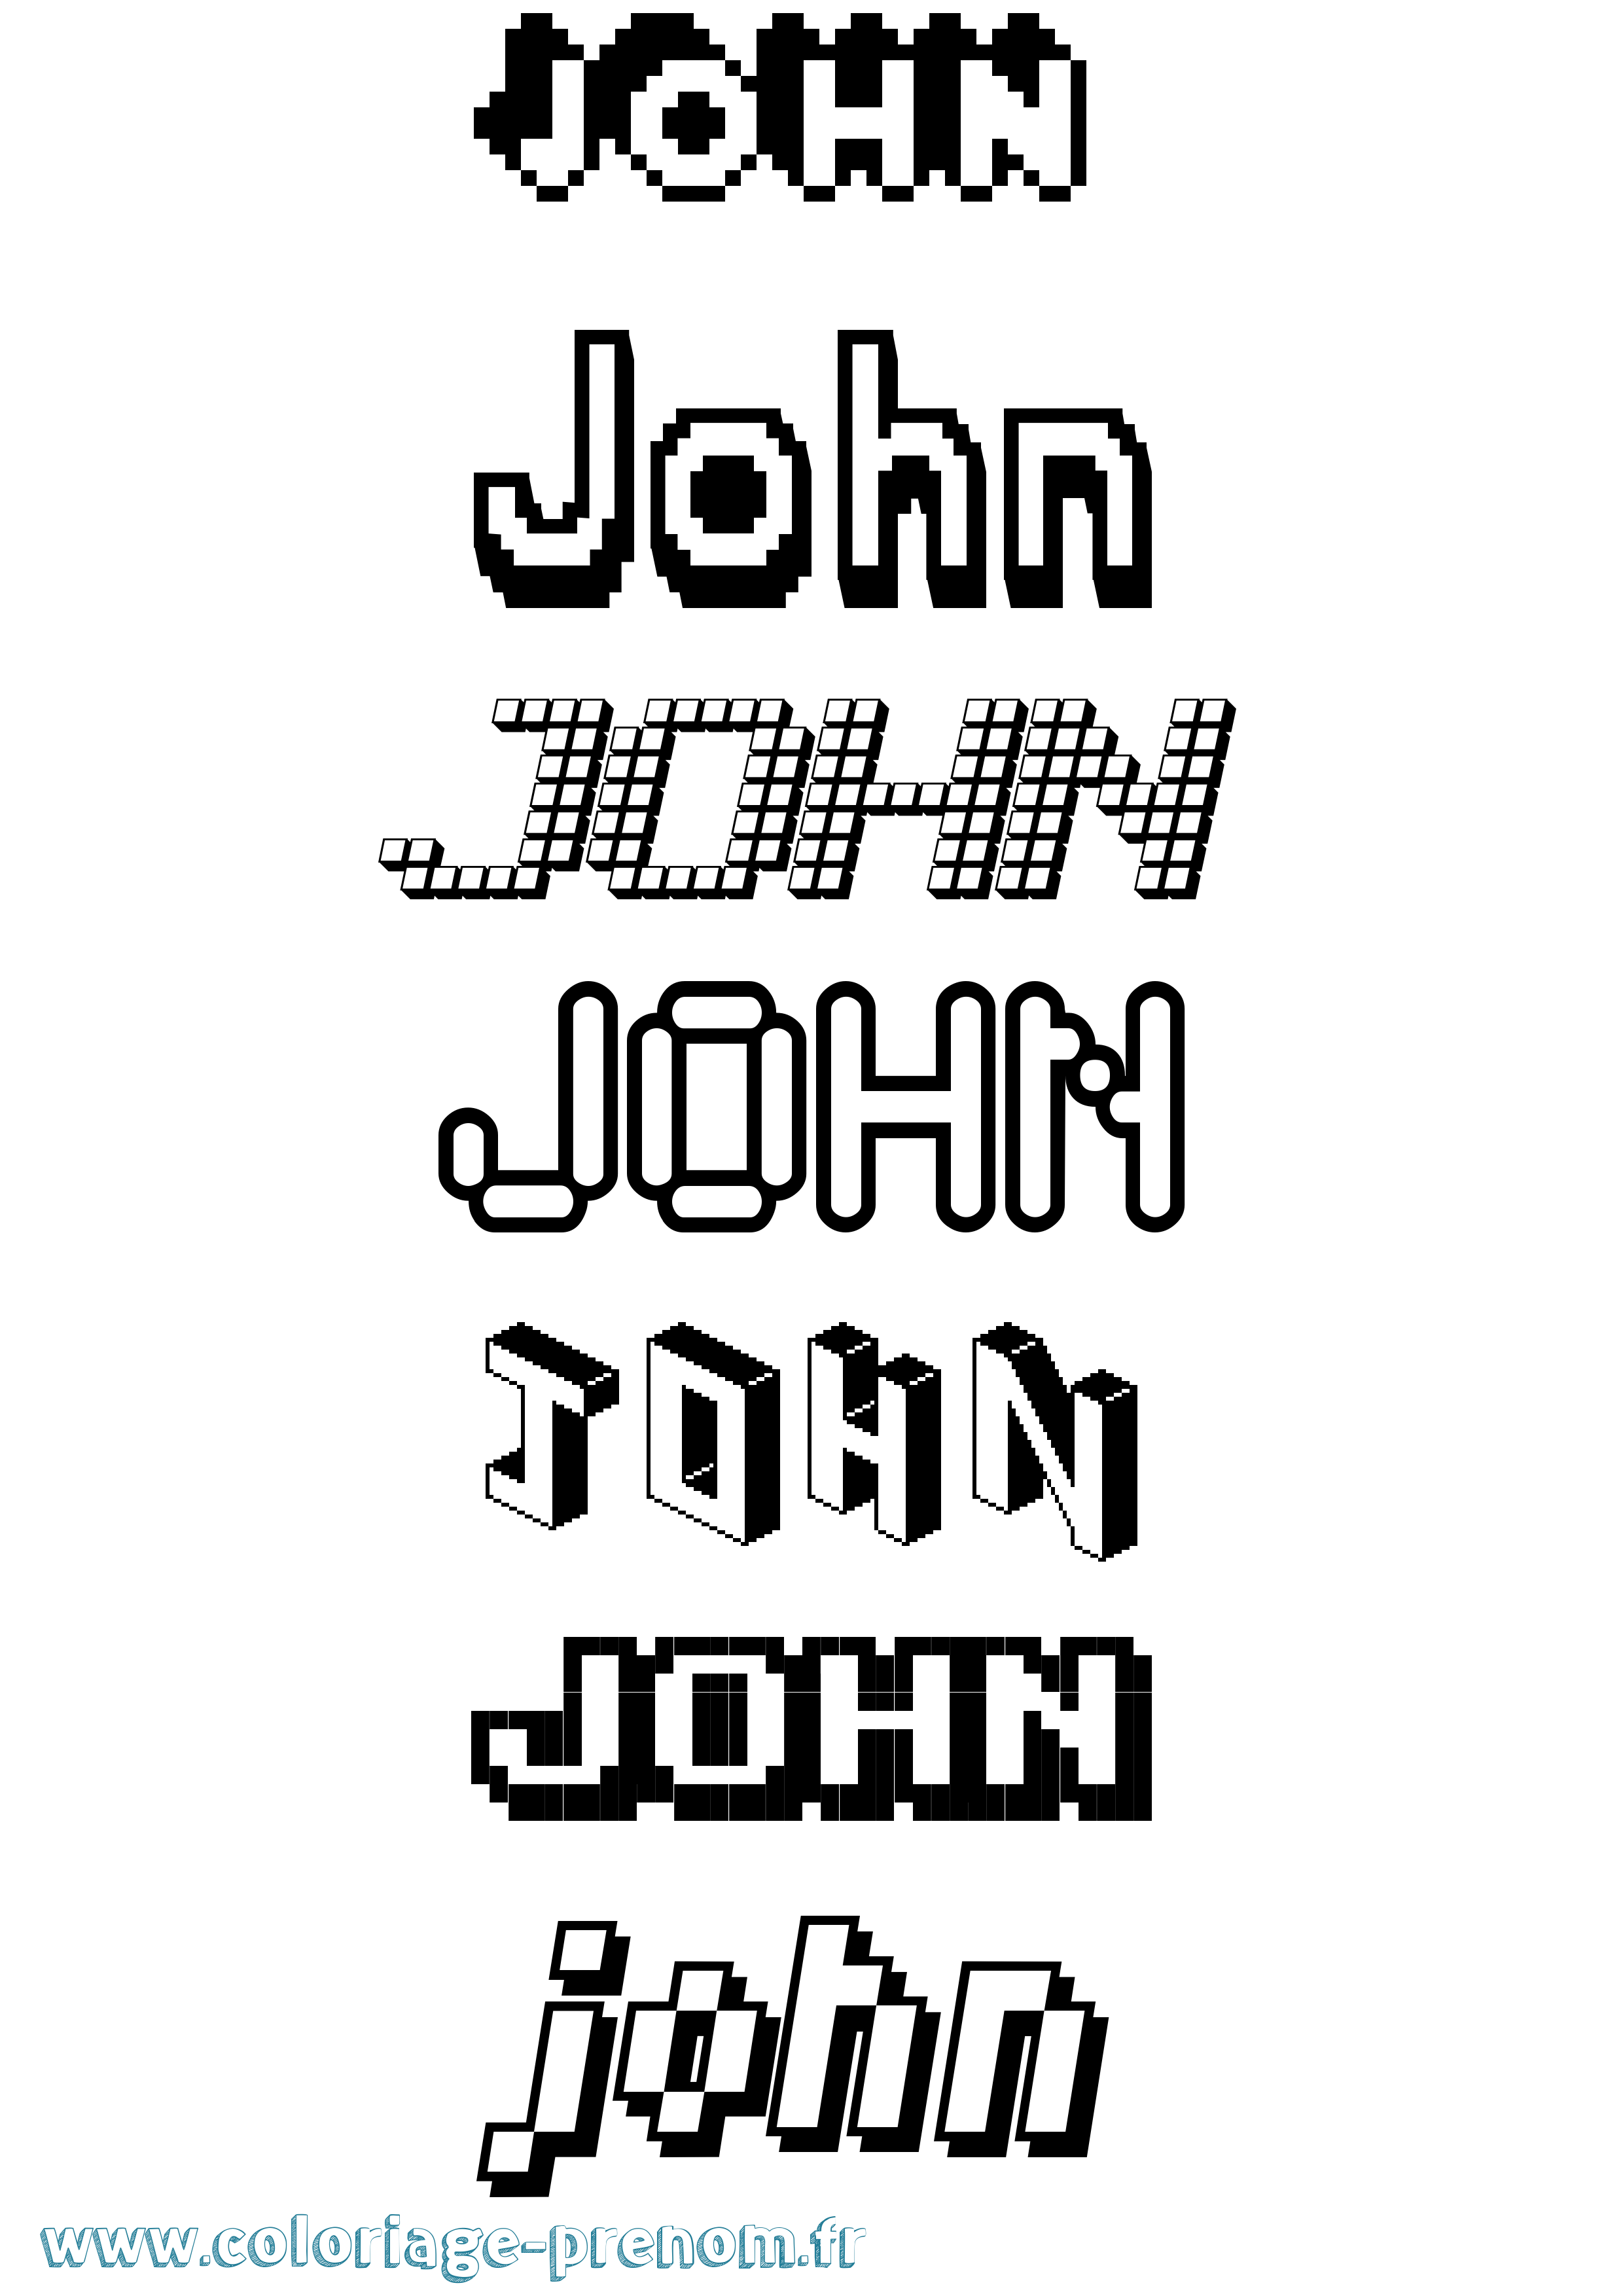 Coloriage prénom John Pixel